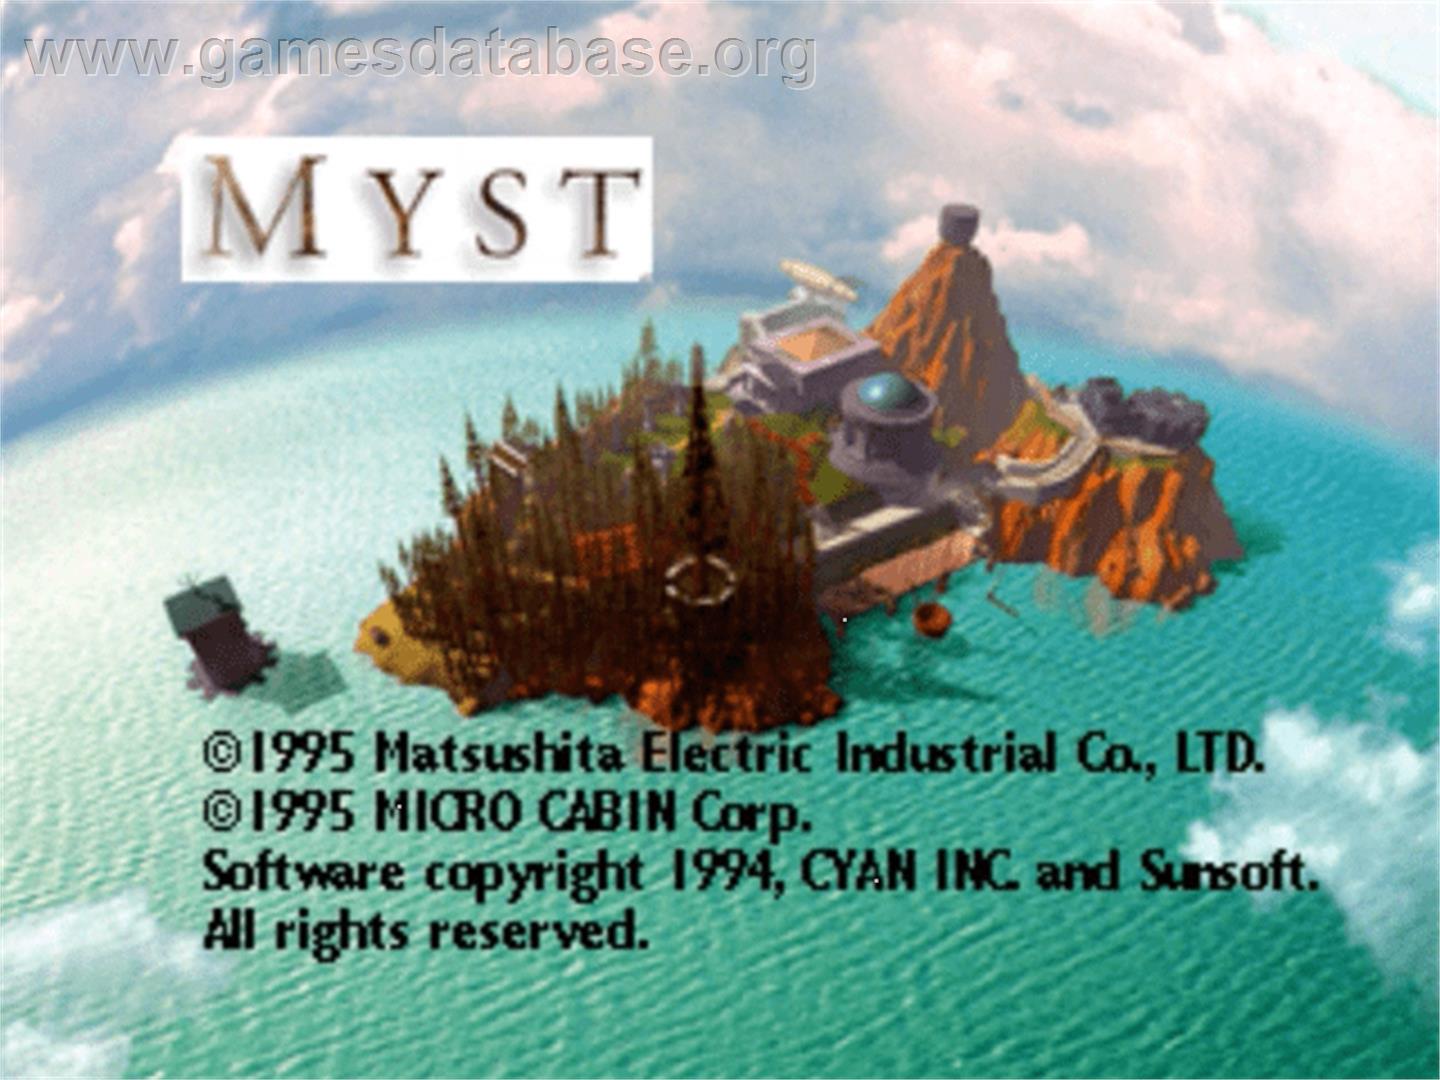 Myst - Panasonic 3DO - Artwork - Title Screen